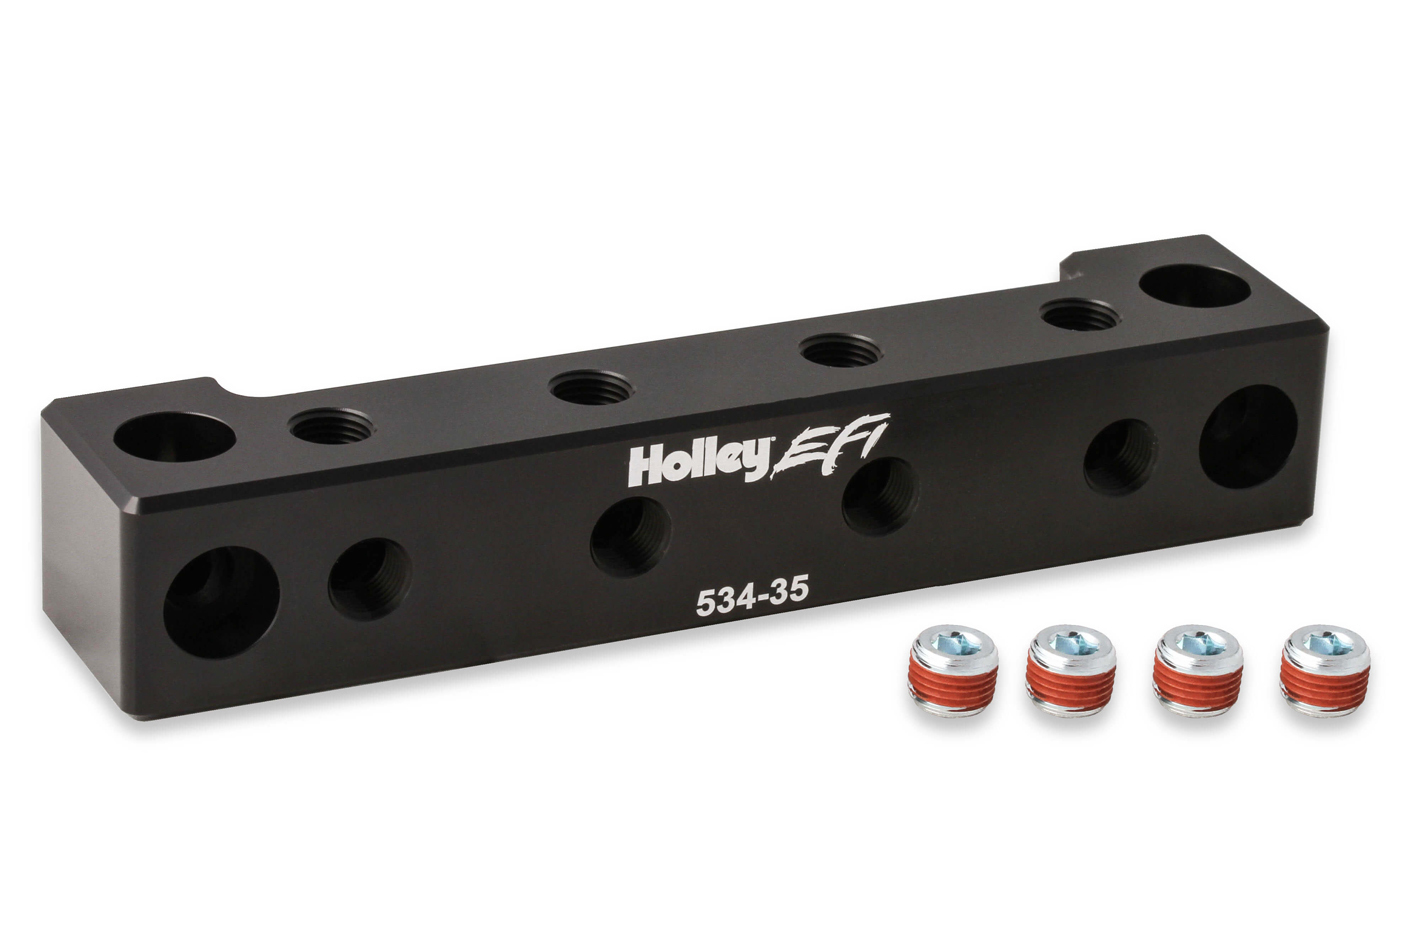 Holley 534-35 - Sensor Block, 1/8 in NPT Female Ports, Aluminum, Black Anodized, Each